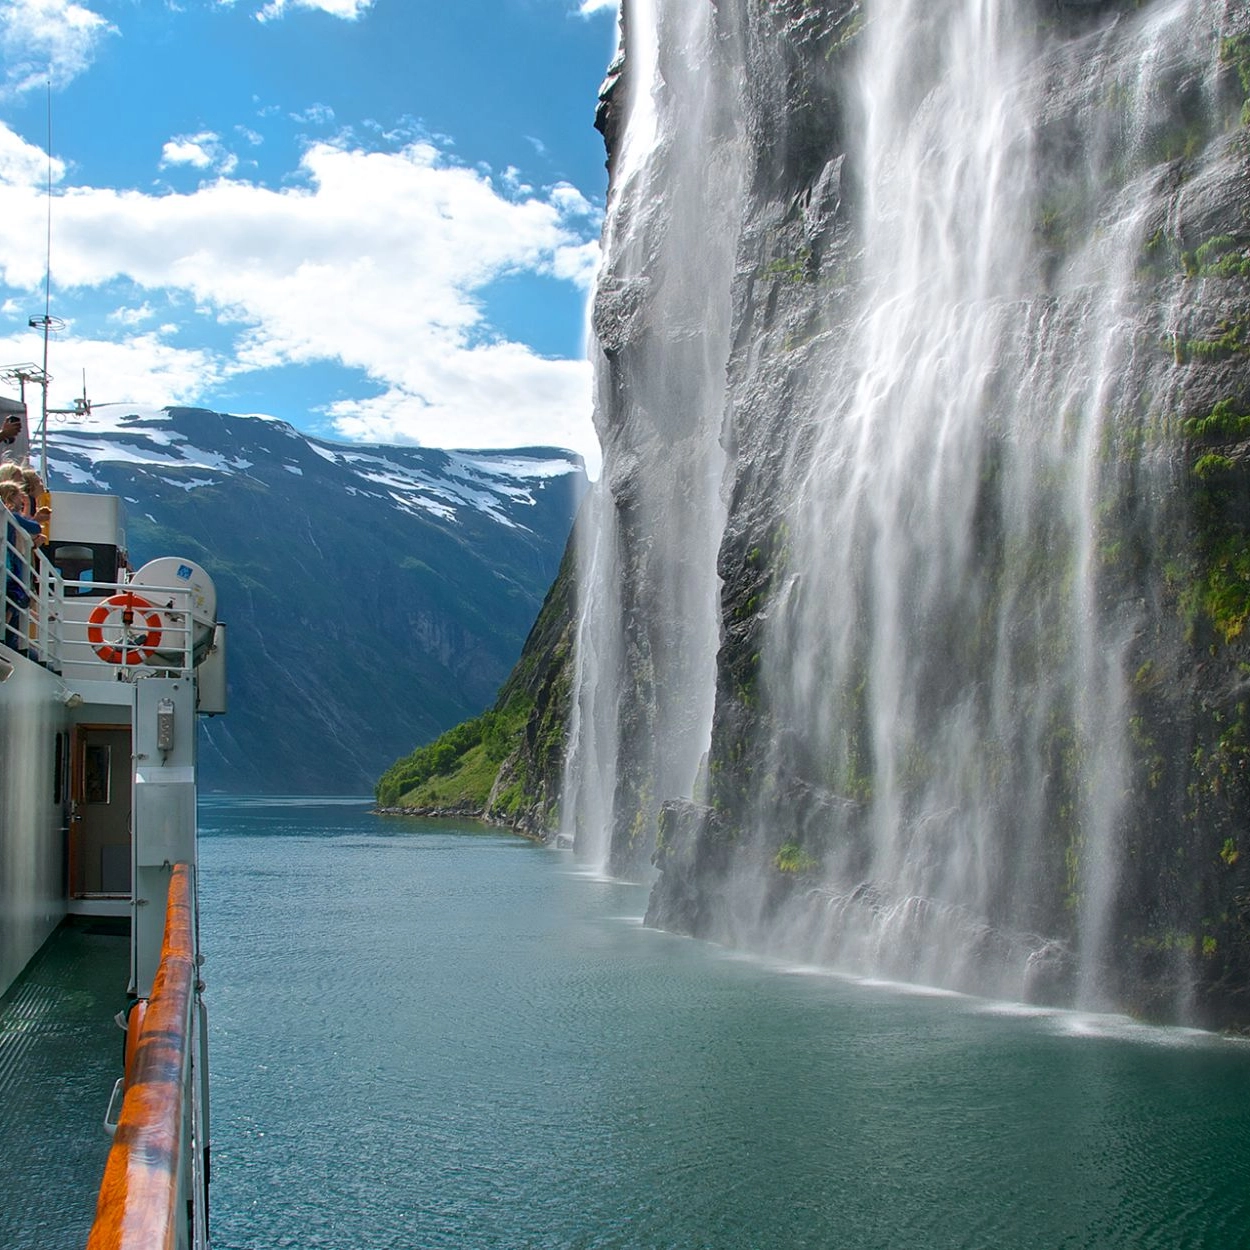 Car ferry Geiranger - Hellesylt, The bridal veil - Geirangerfjord - Norway